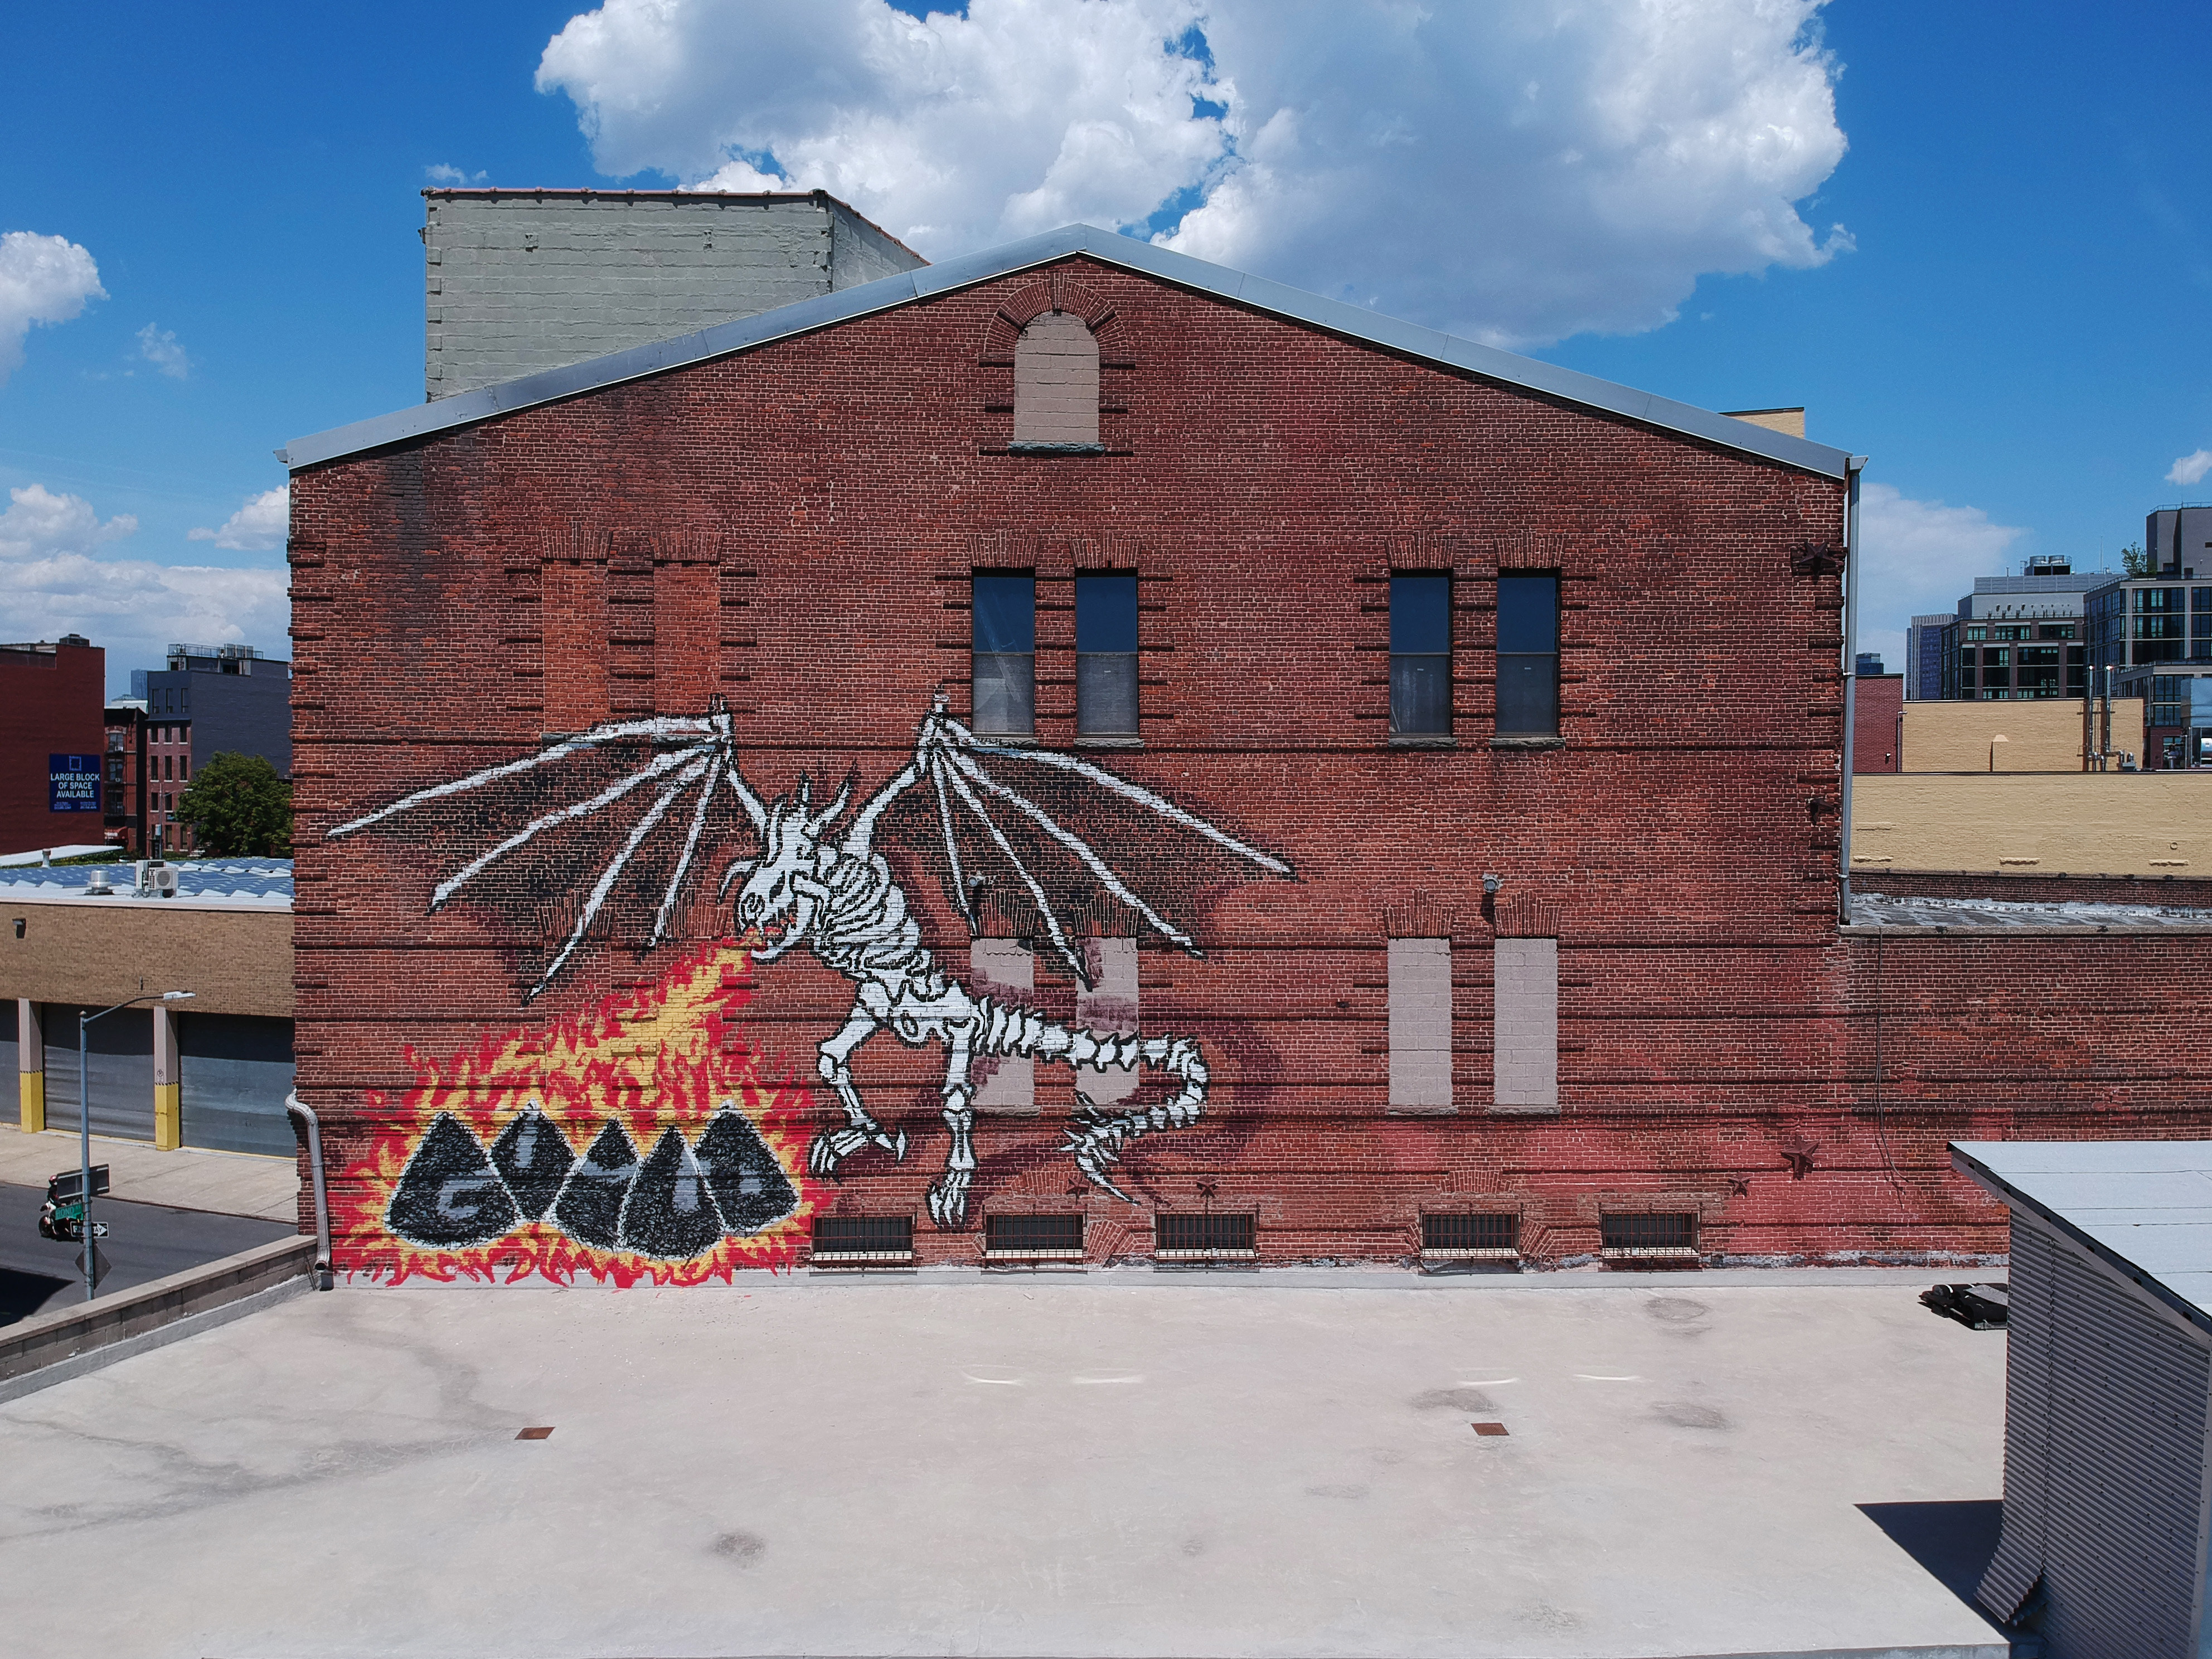 graffiti on a brick building in Gowanus